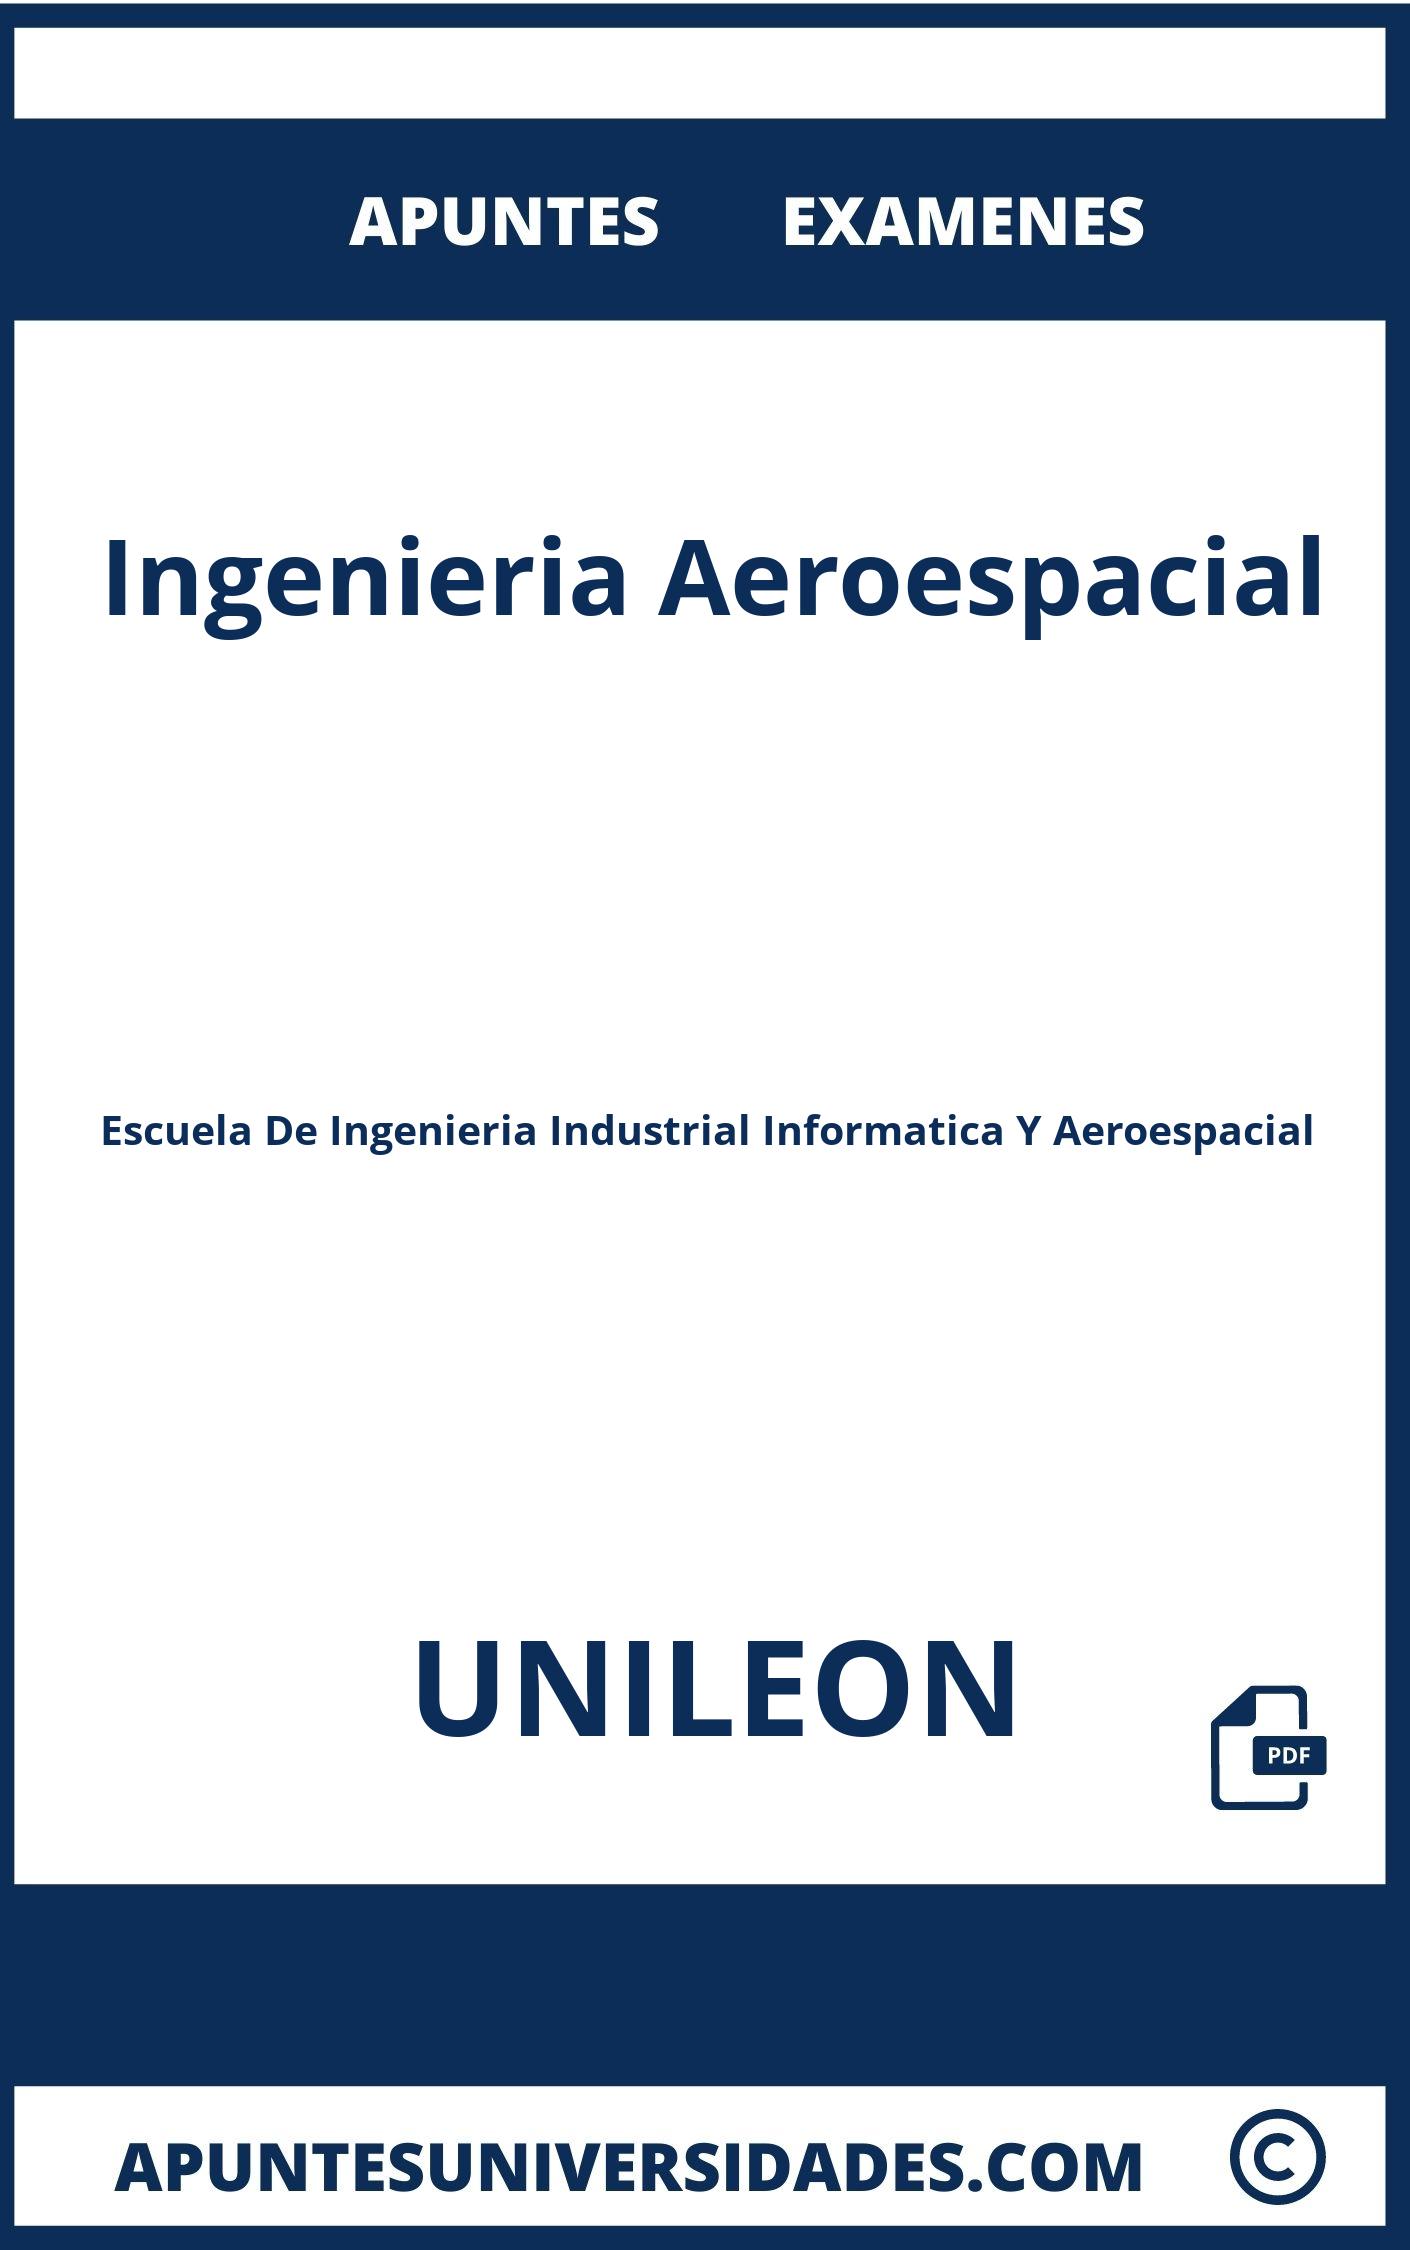 Apuntes Examenes Ingenieria Aeroespacial UNILEON